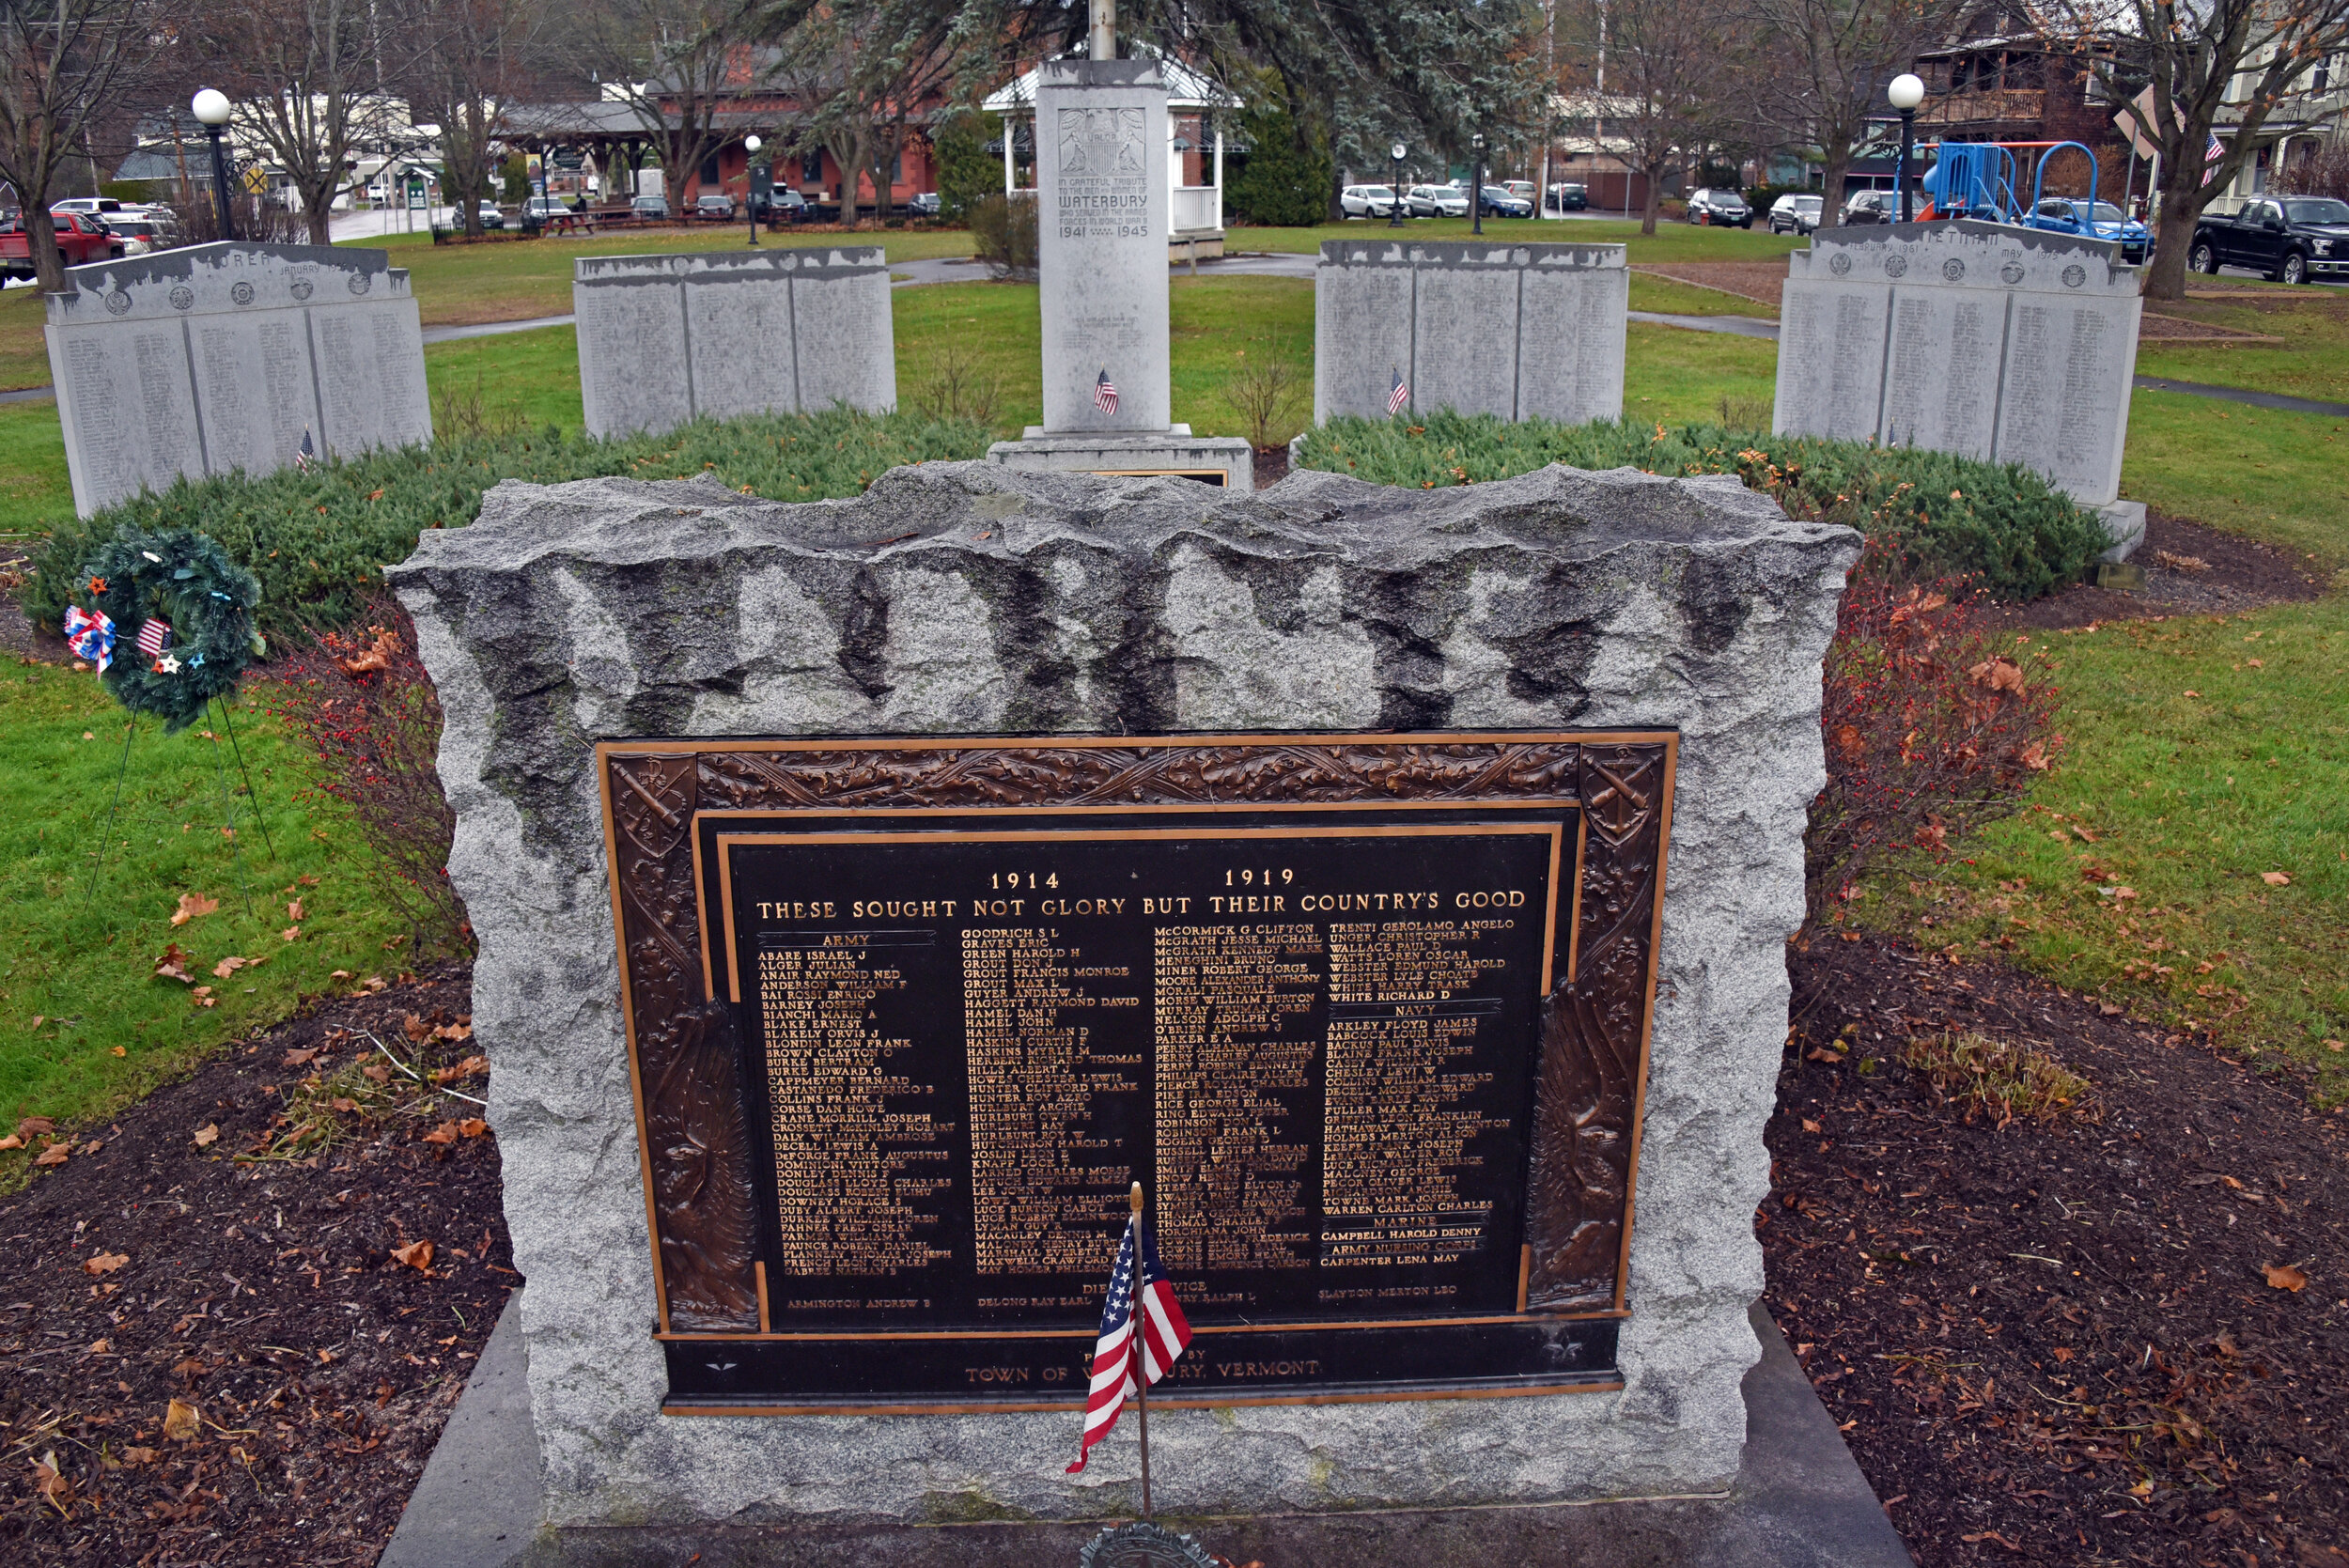   Veterans Day, Nov. 11, 20202 at Rusty Parker Memorial Park's war memorial monuments. Photo by Gordon Miller.  